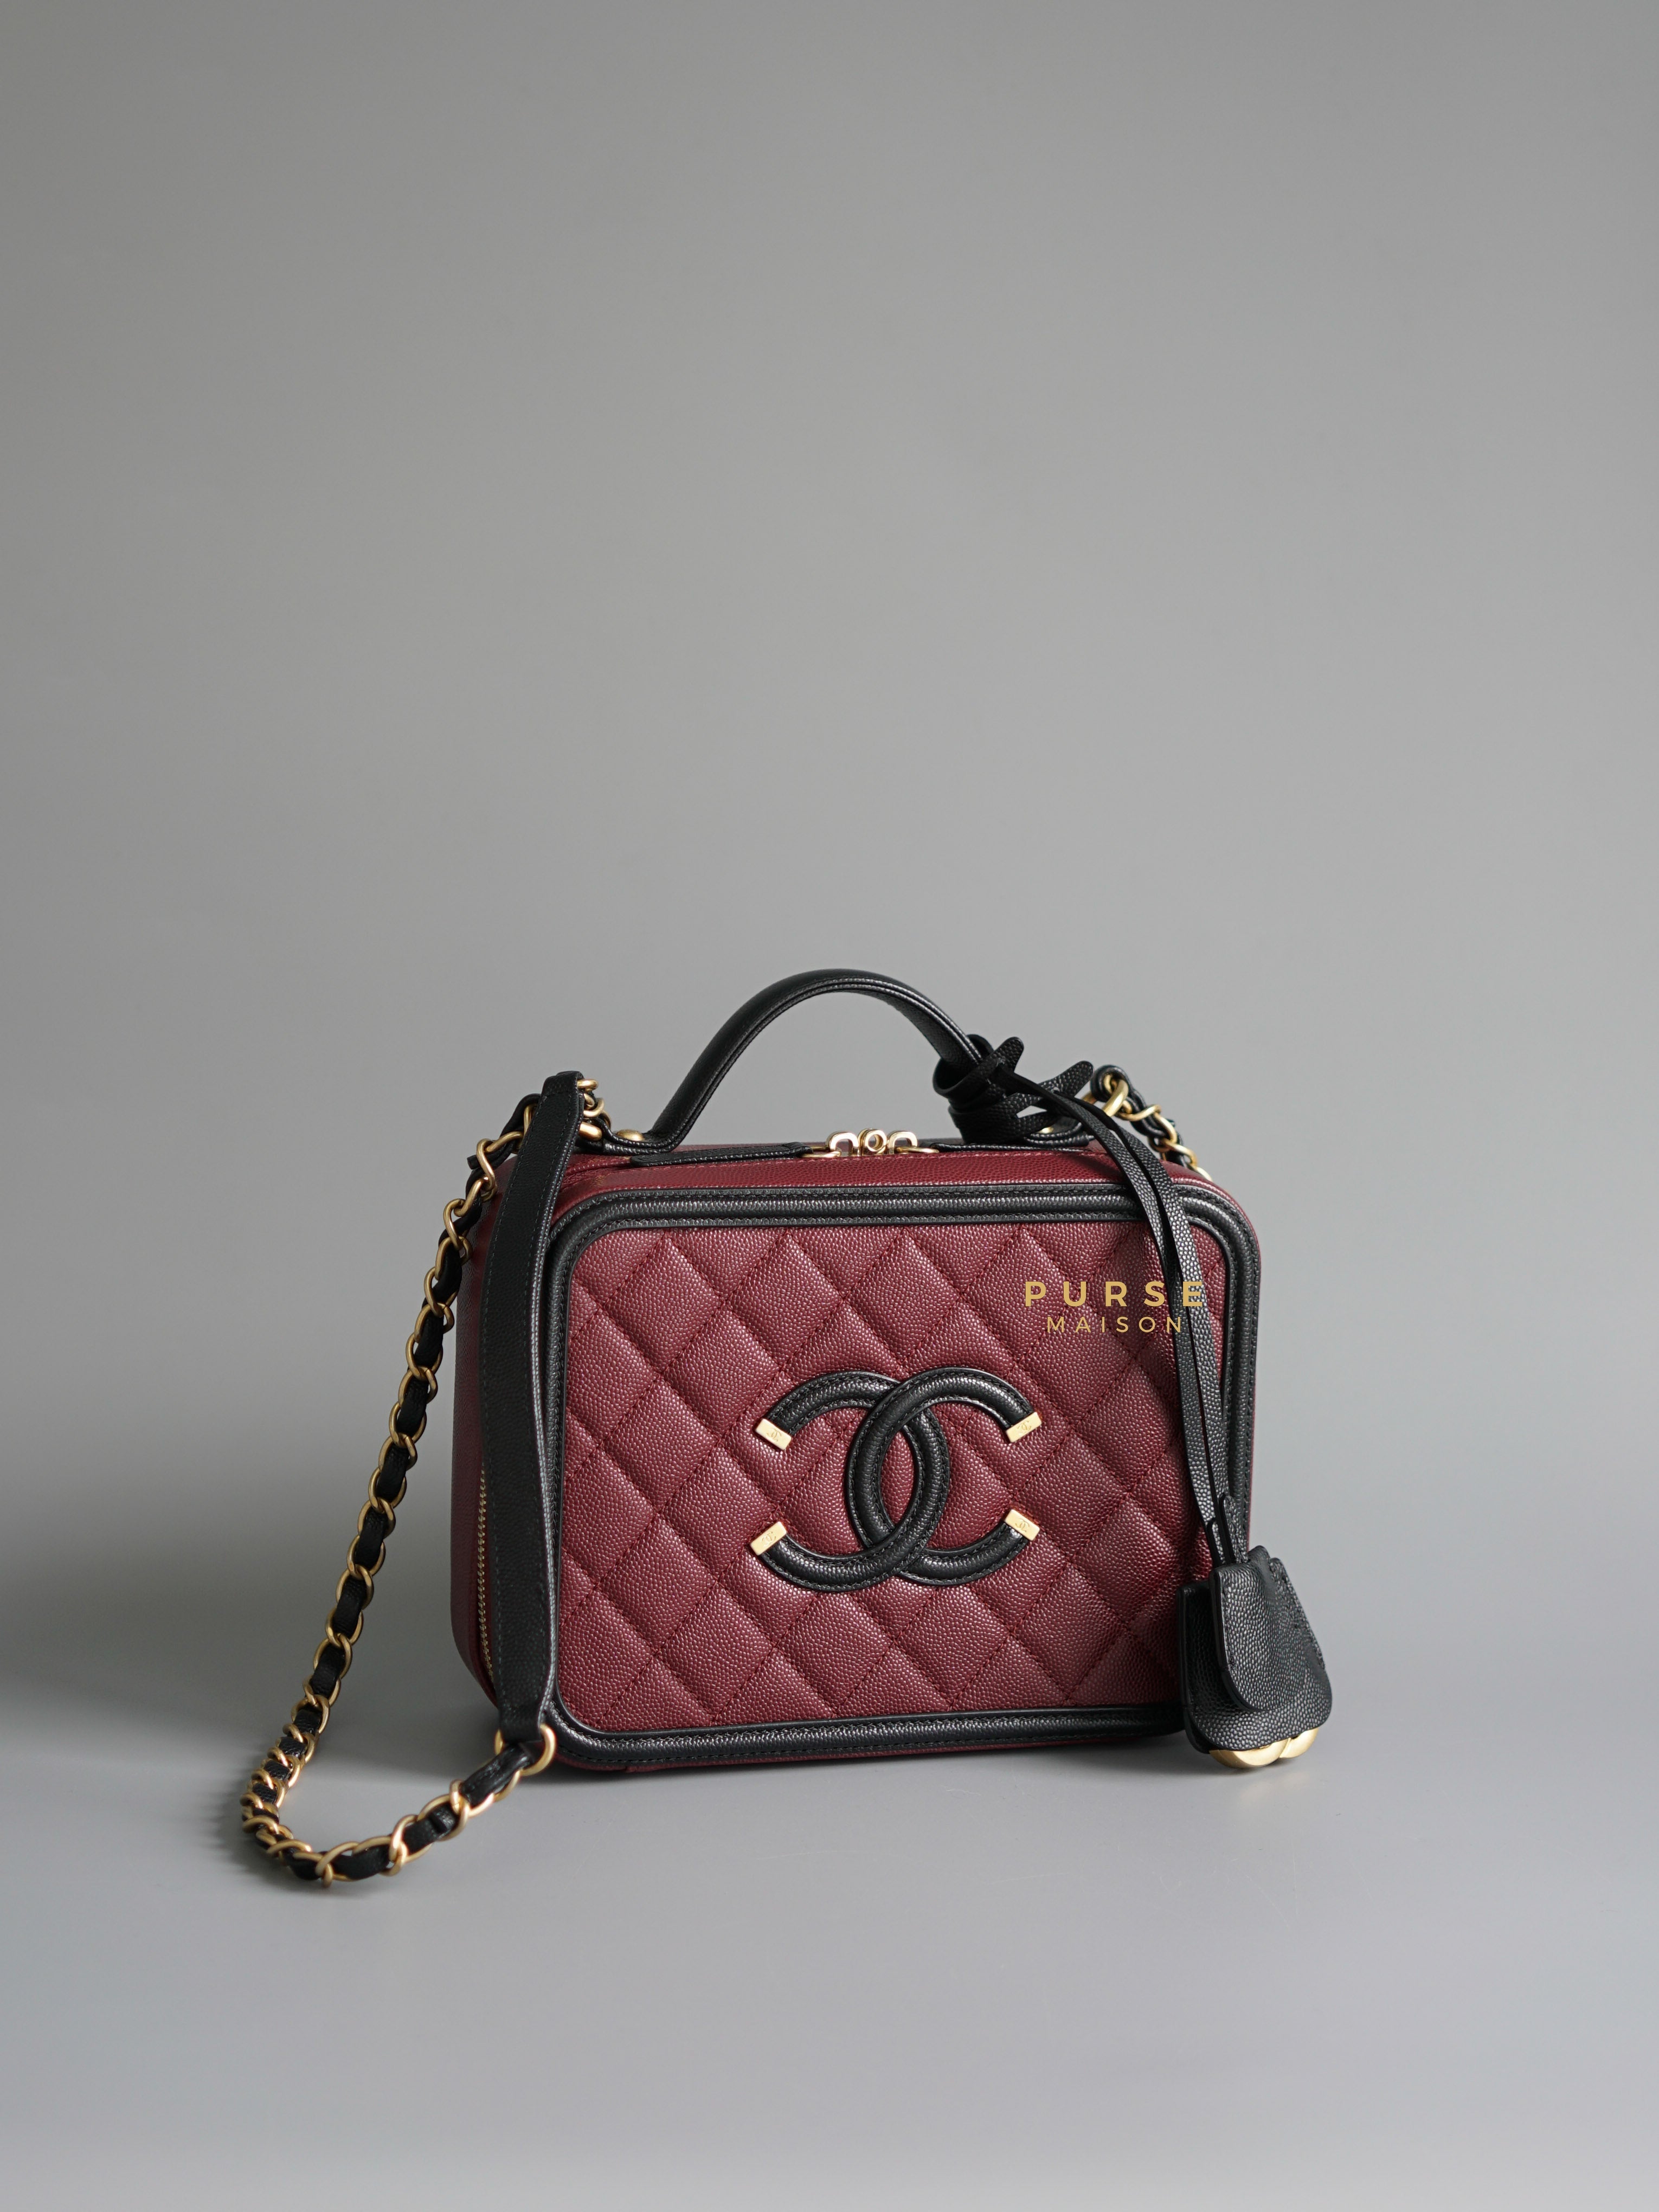 Chanel CC Filigree Medium Vanity Bag Maroon/Black Caviar Leather in Aged Gold Hardware Series 28 | Purse Maison Luxury Bags Shop